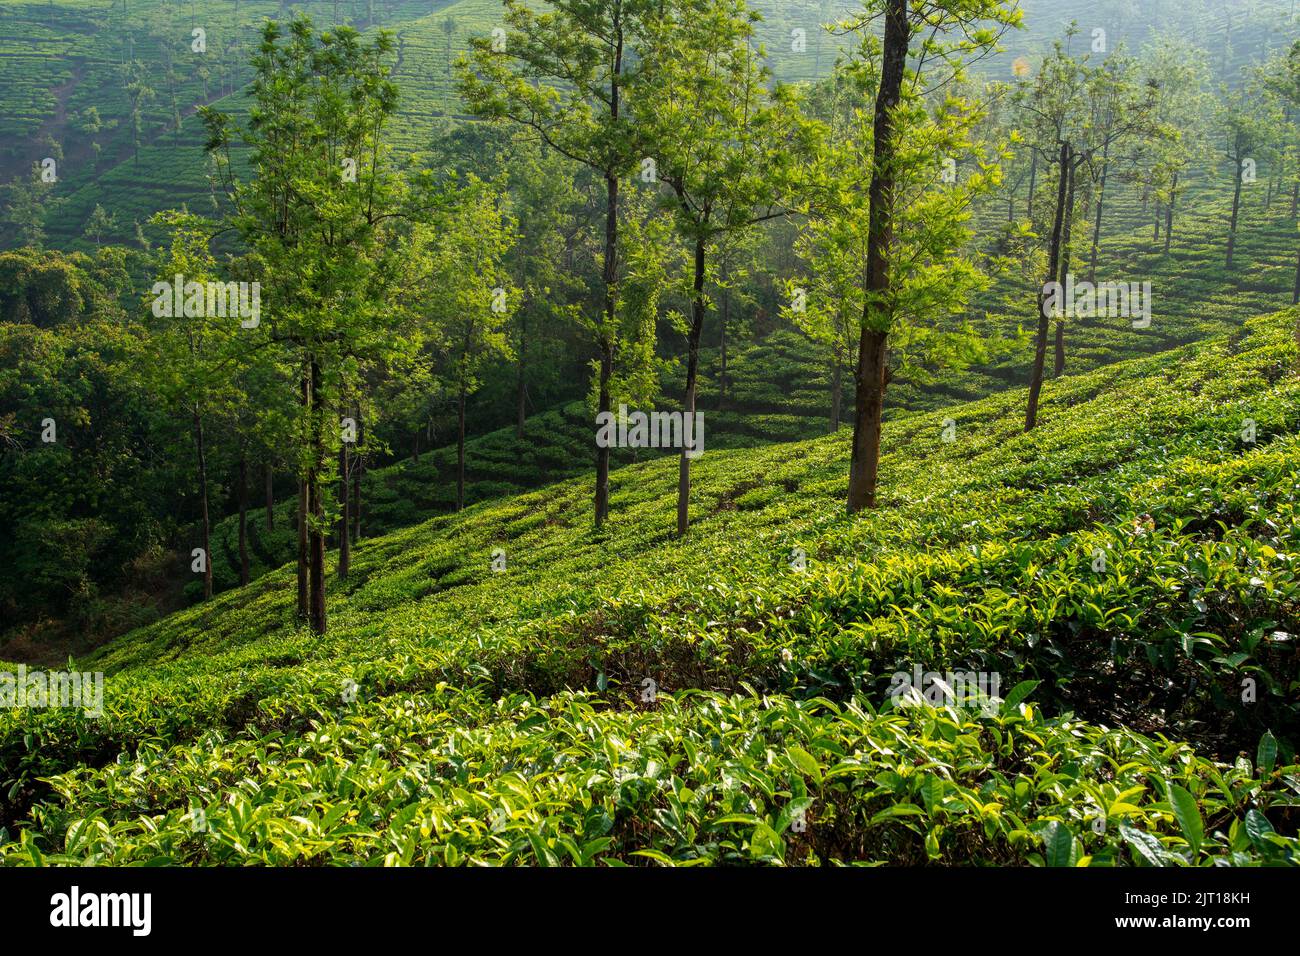 Morning View of Tea Plantation in Nilgiri Hills Stock Photo